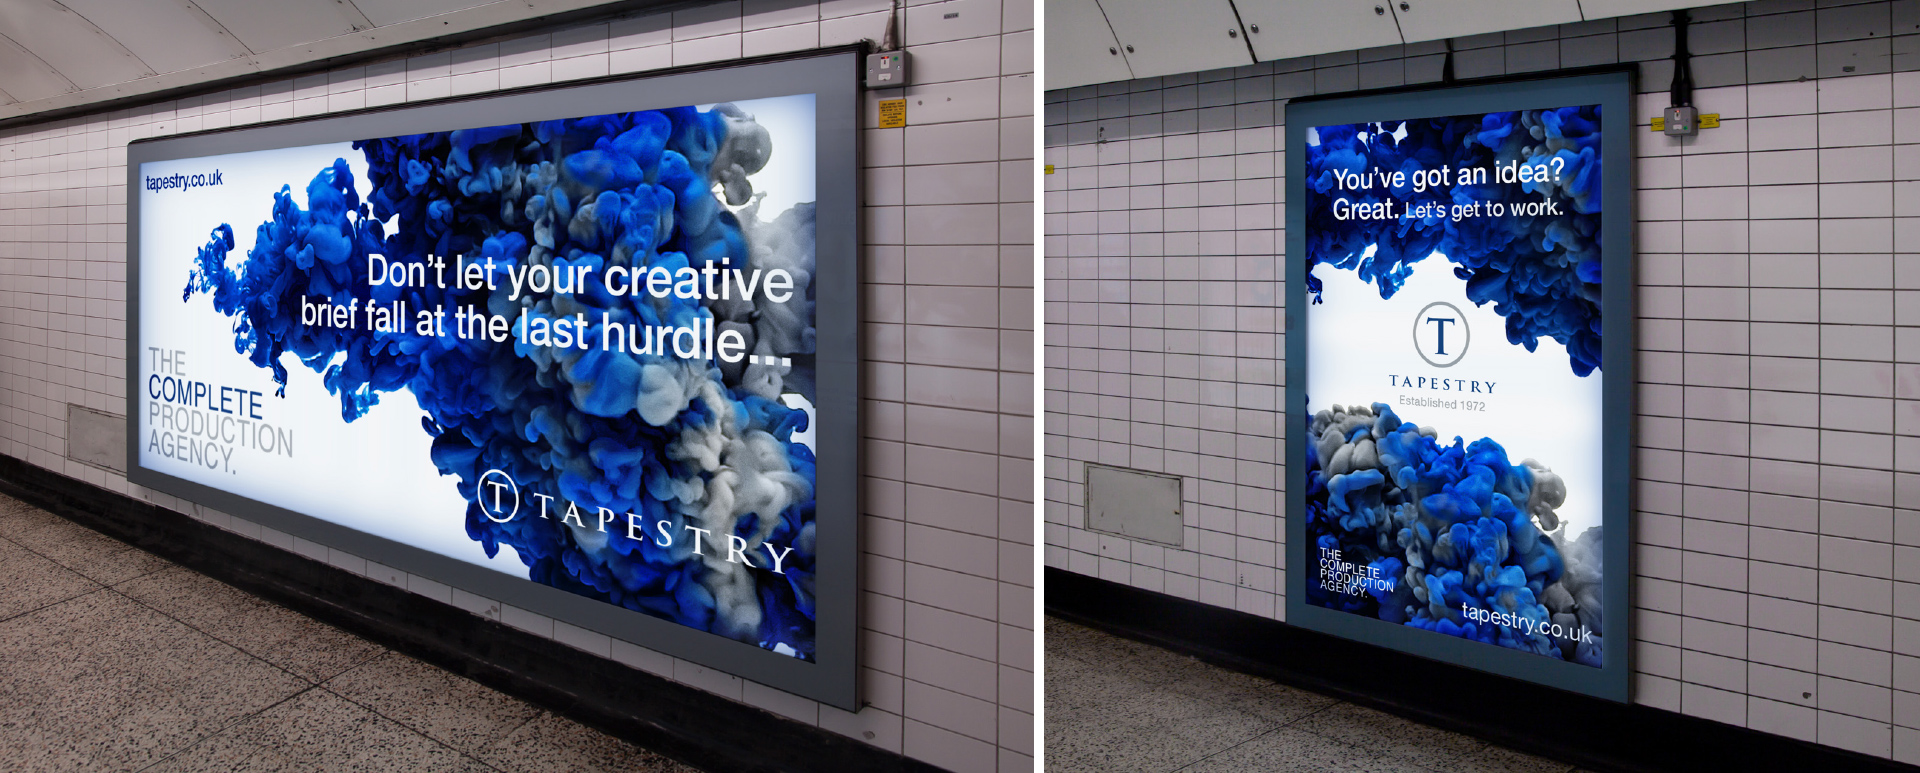 tapestry-artwork-ooh-billboard-agency